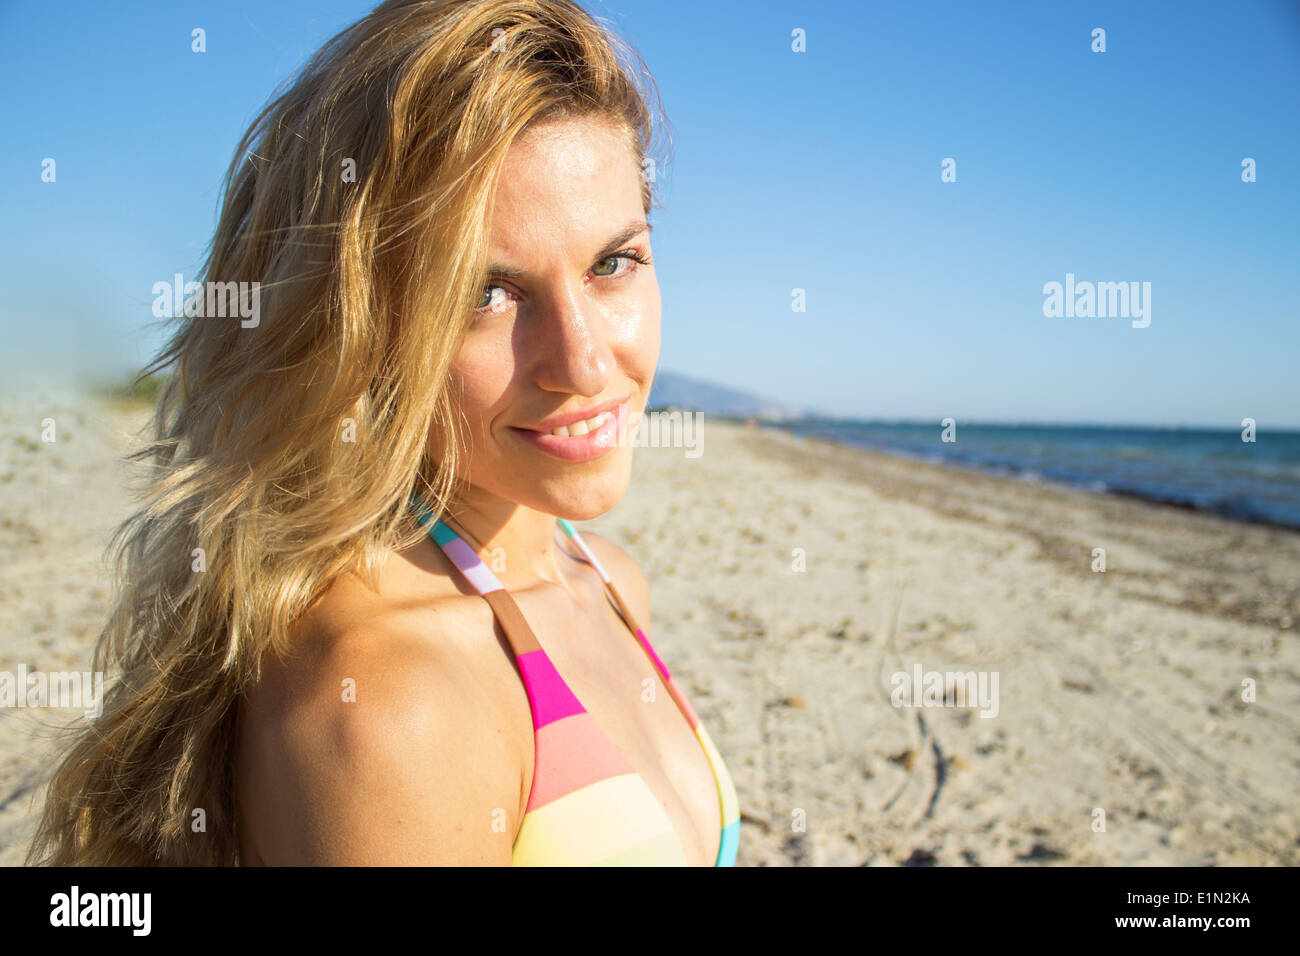 woman girl smiling happy beach summer vacation ocean sea bikini face smiling relaxed Stock Photo